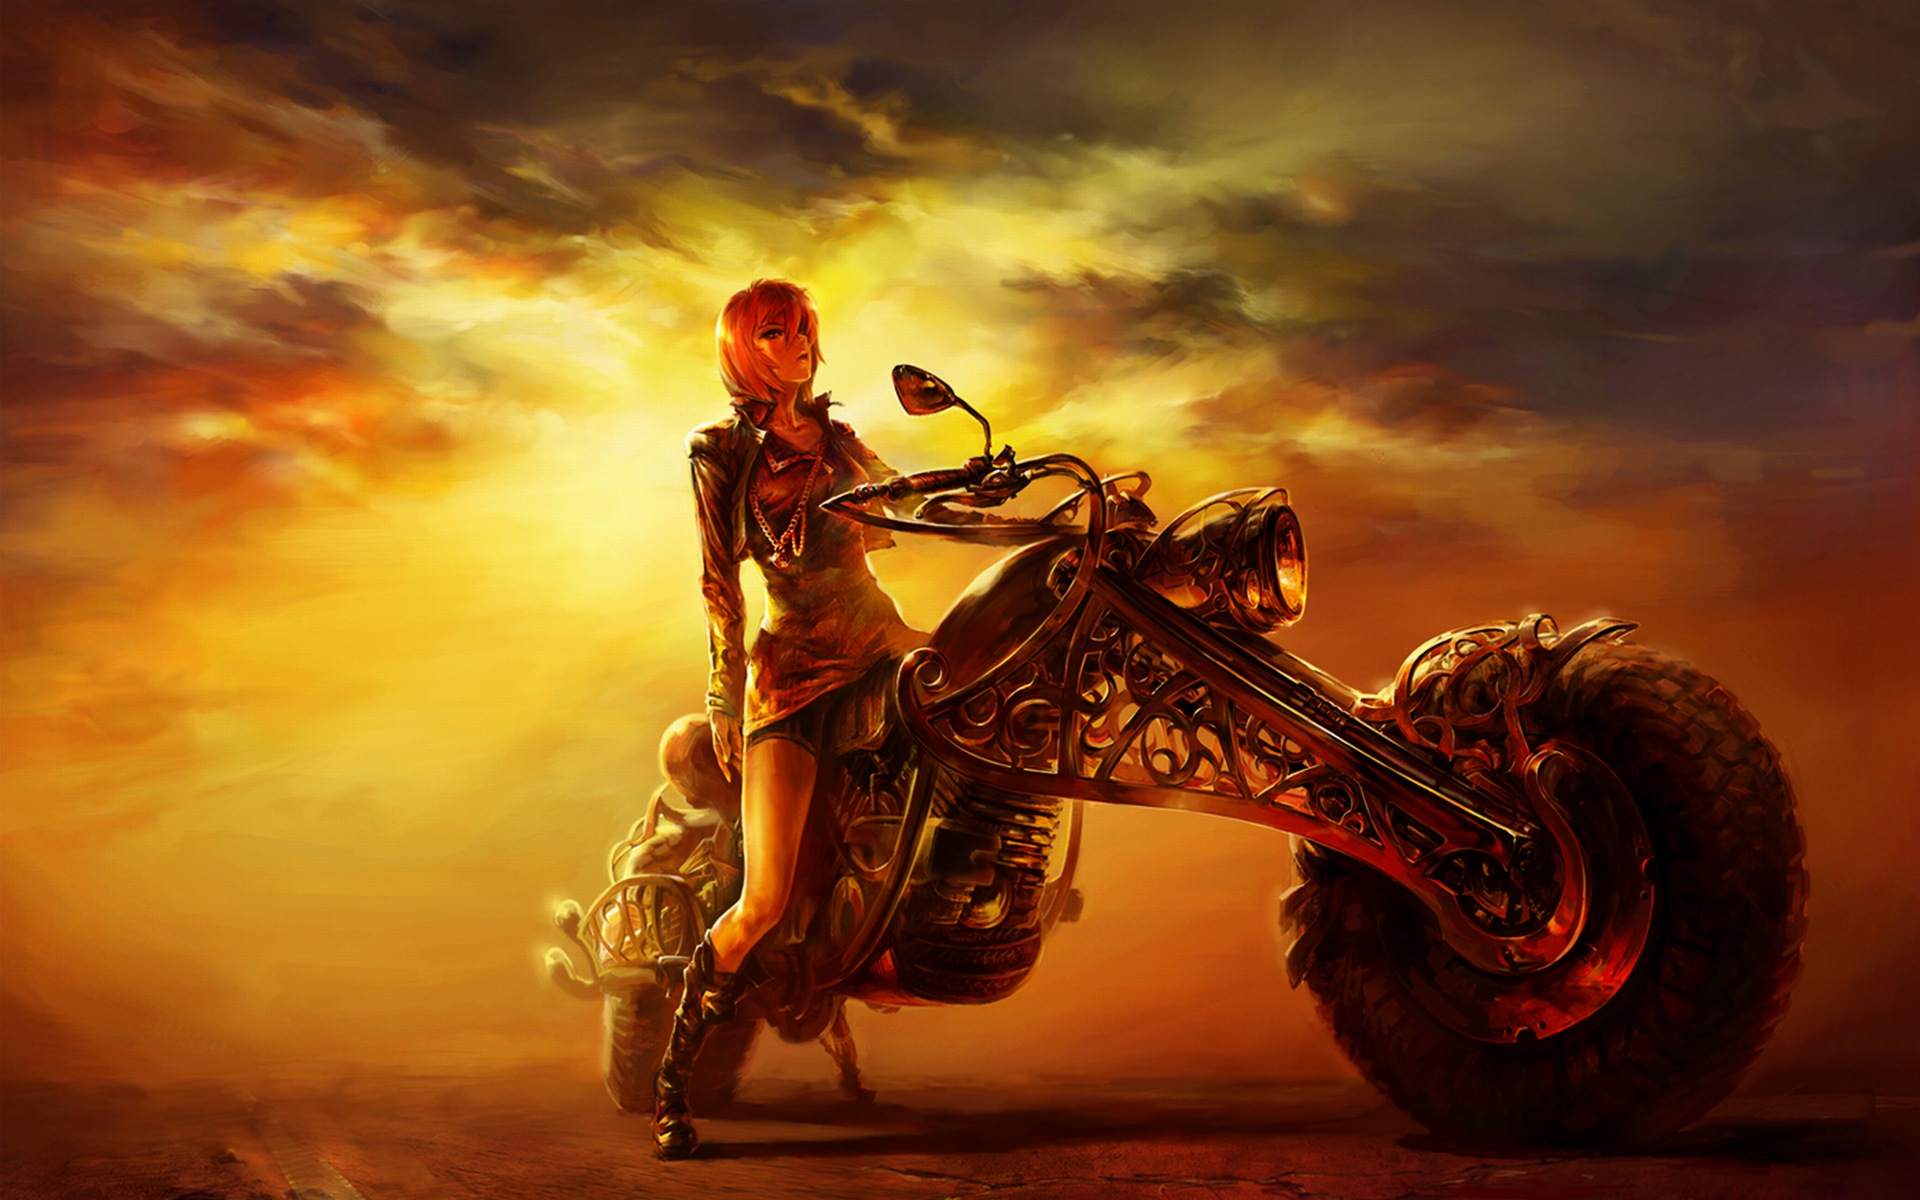 cg girl wallpaper,motorcycle,vehicle,desert racing,motorcycling,sky